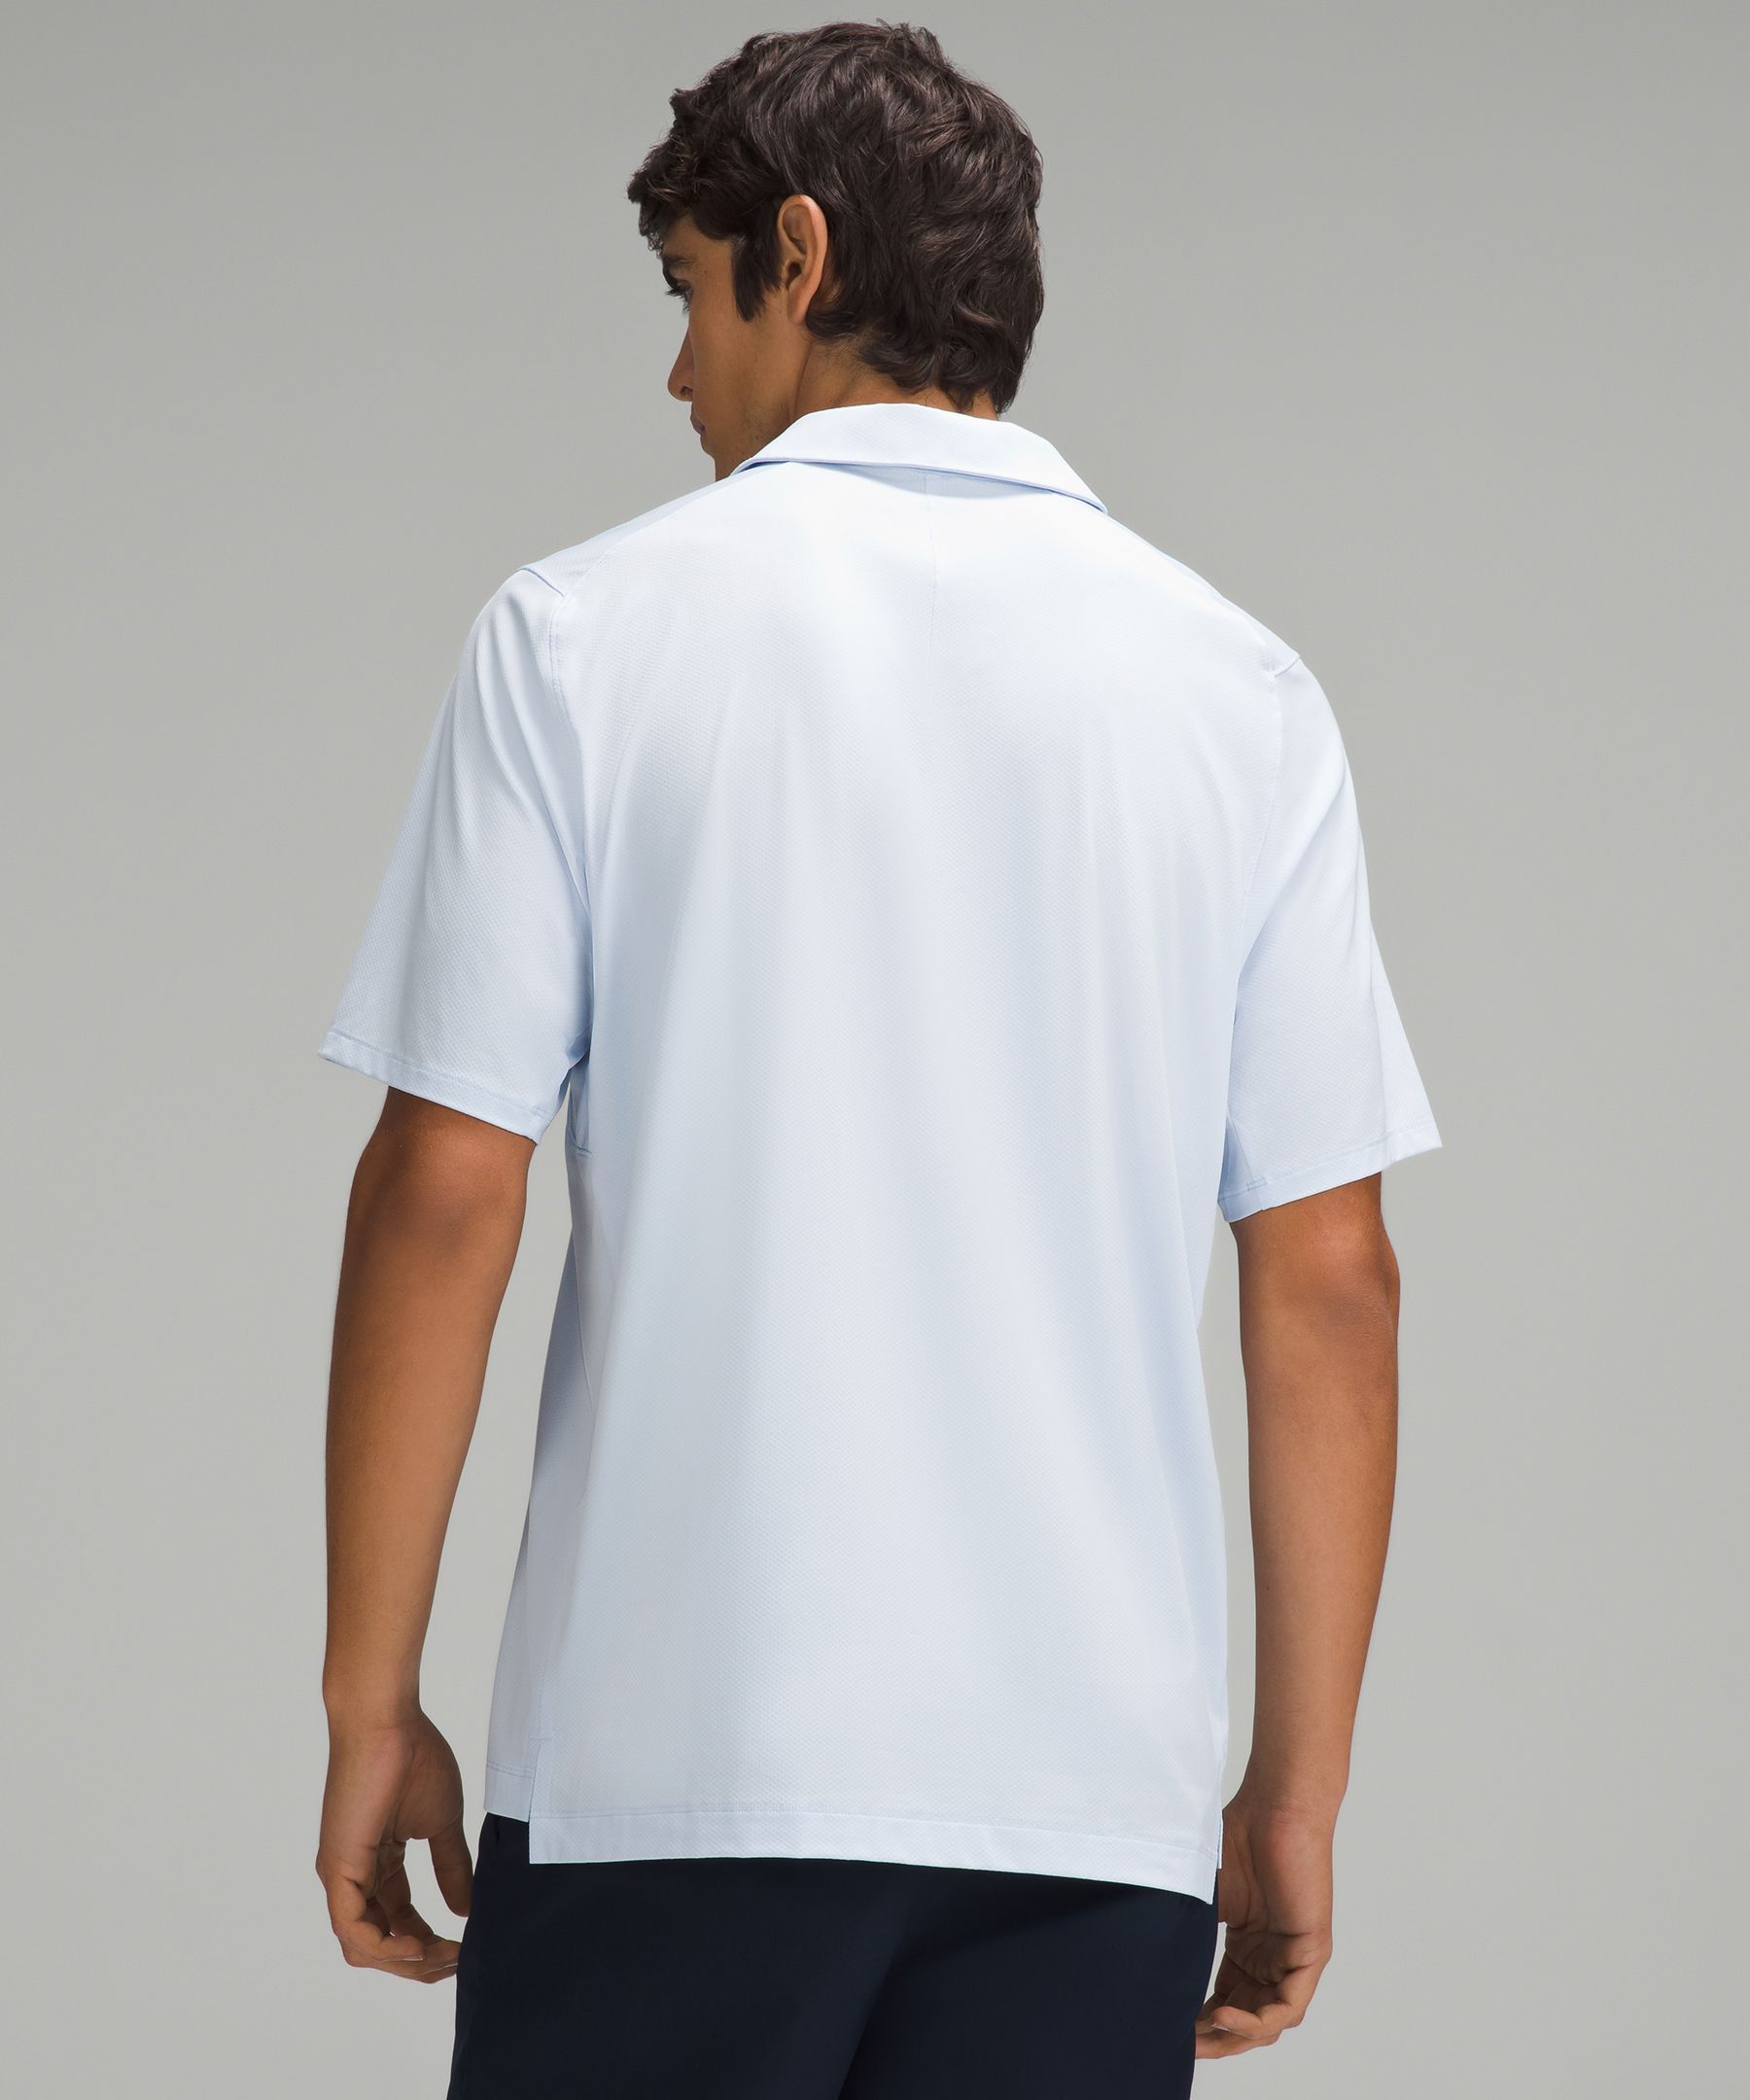 Logo Sport Polo Short Sleeve | Men's Shirts & Tee's